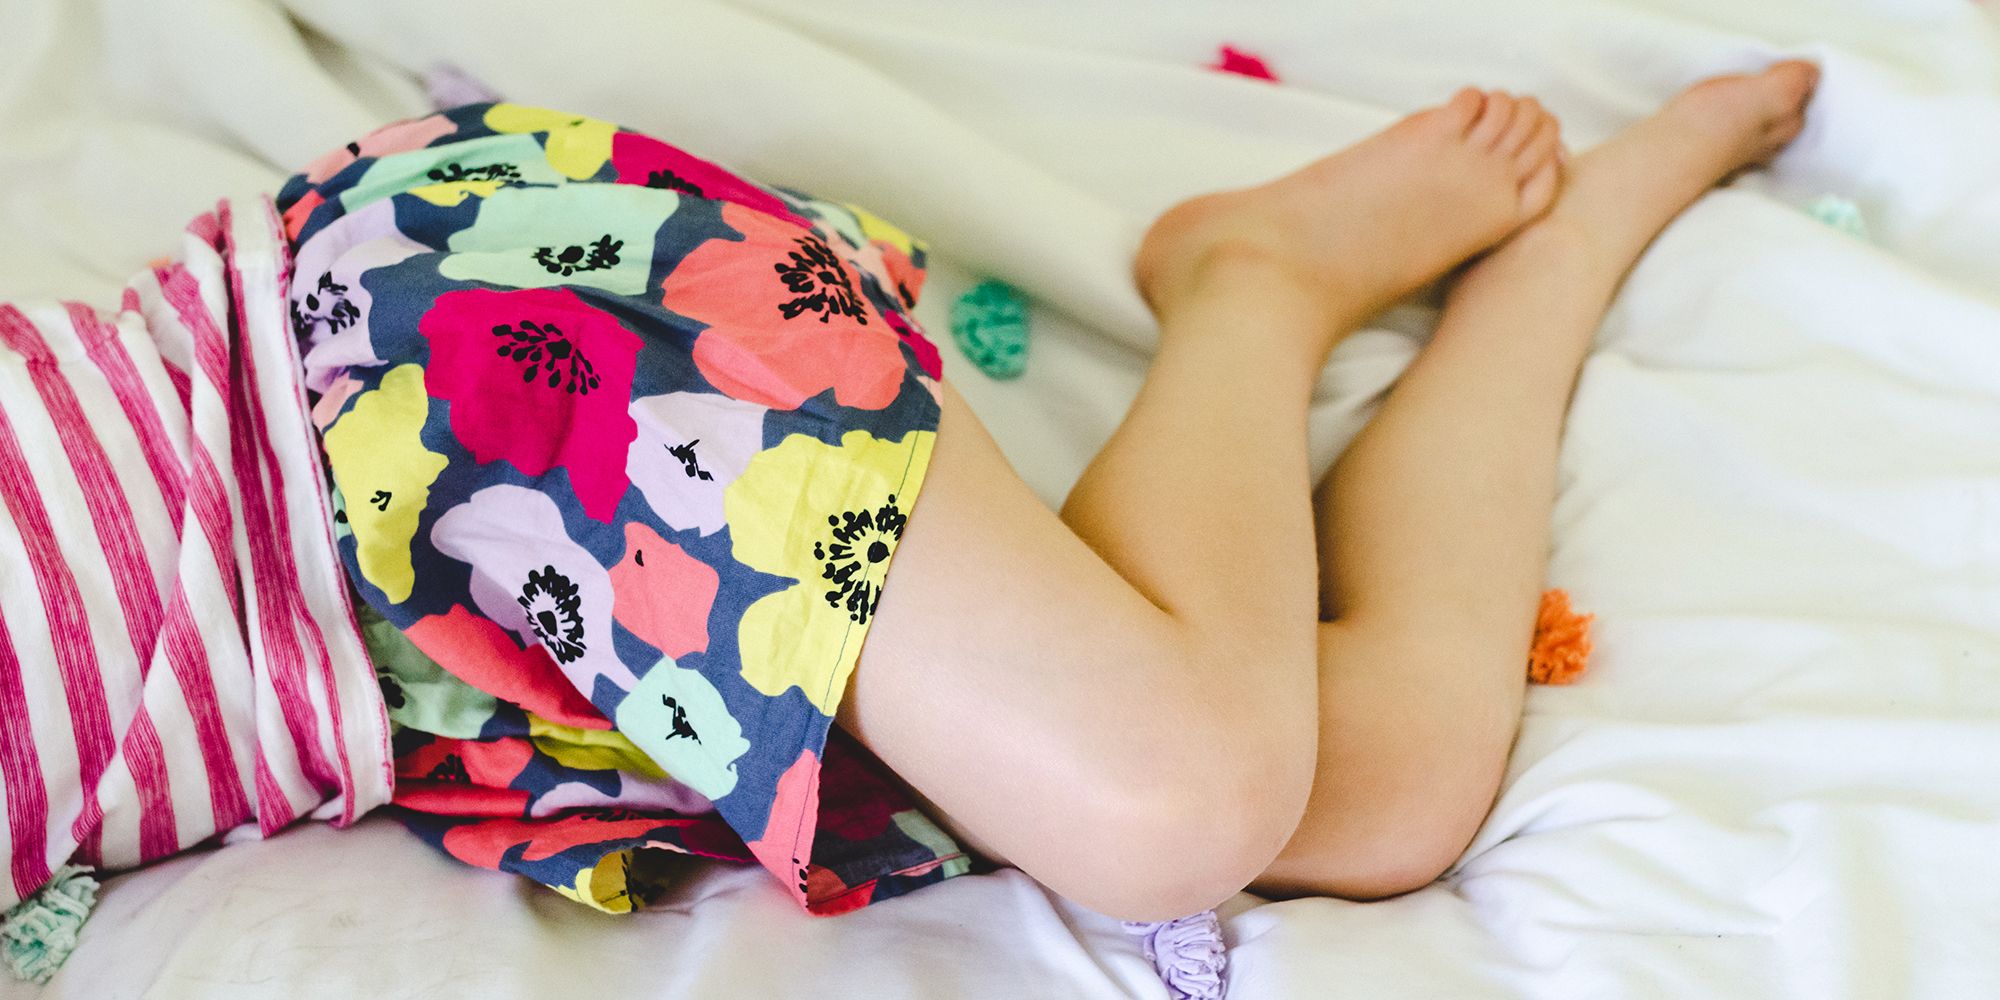 Bedwetting Alarm Underwear Kit  Pjama Bed Wetting Treatment Boxer